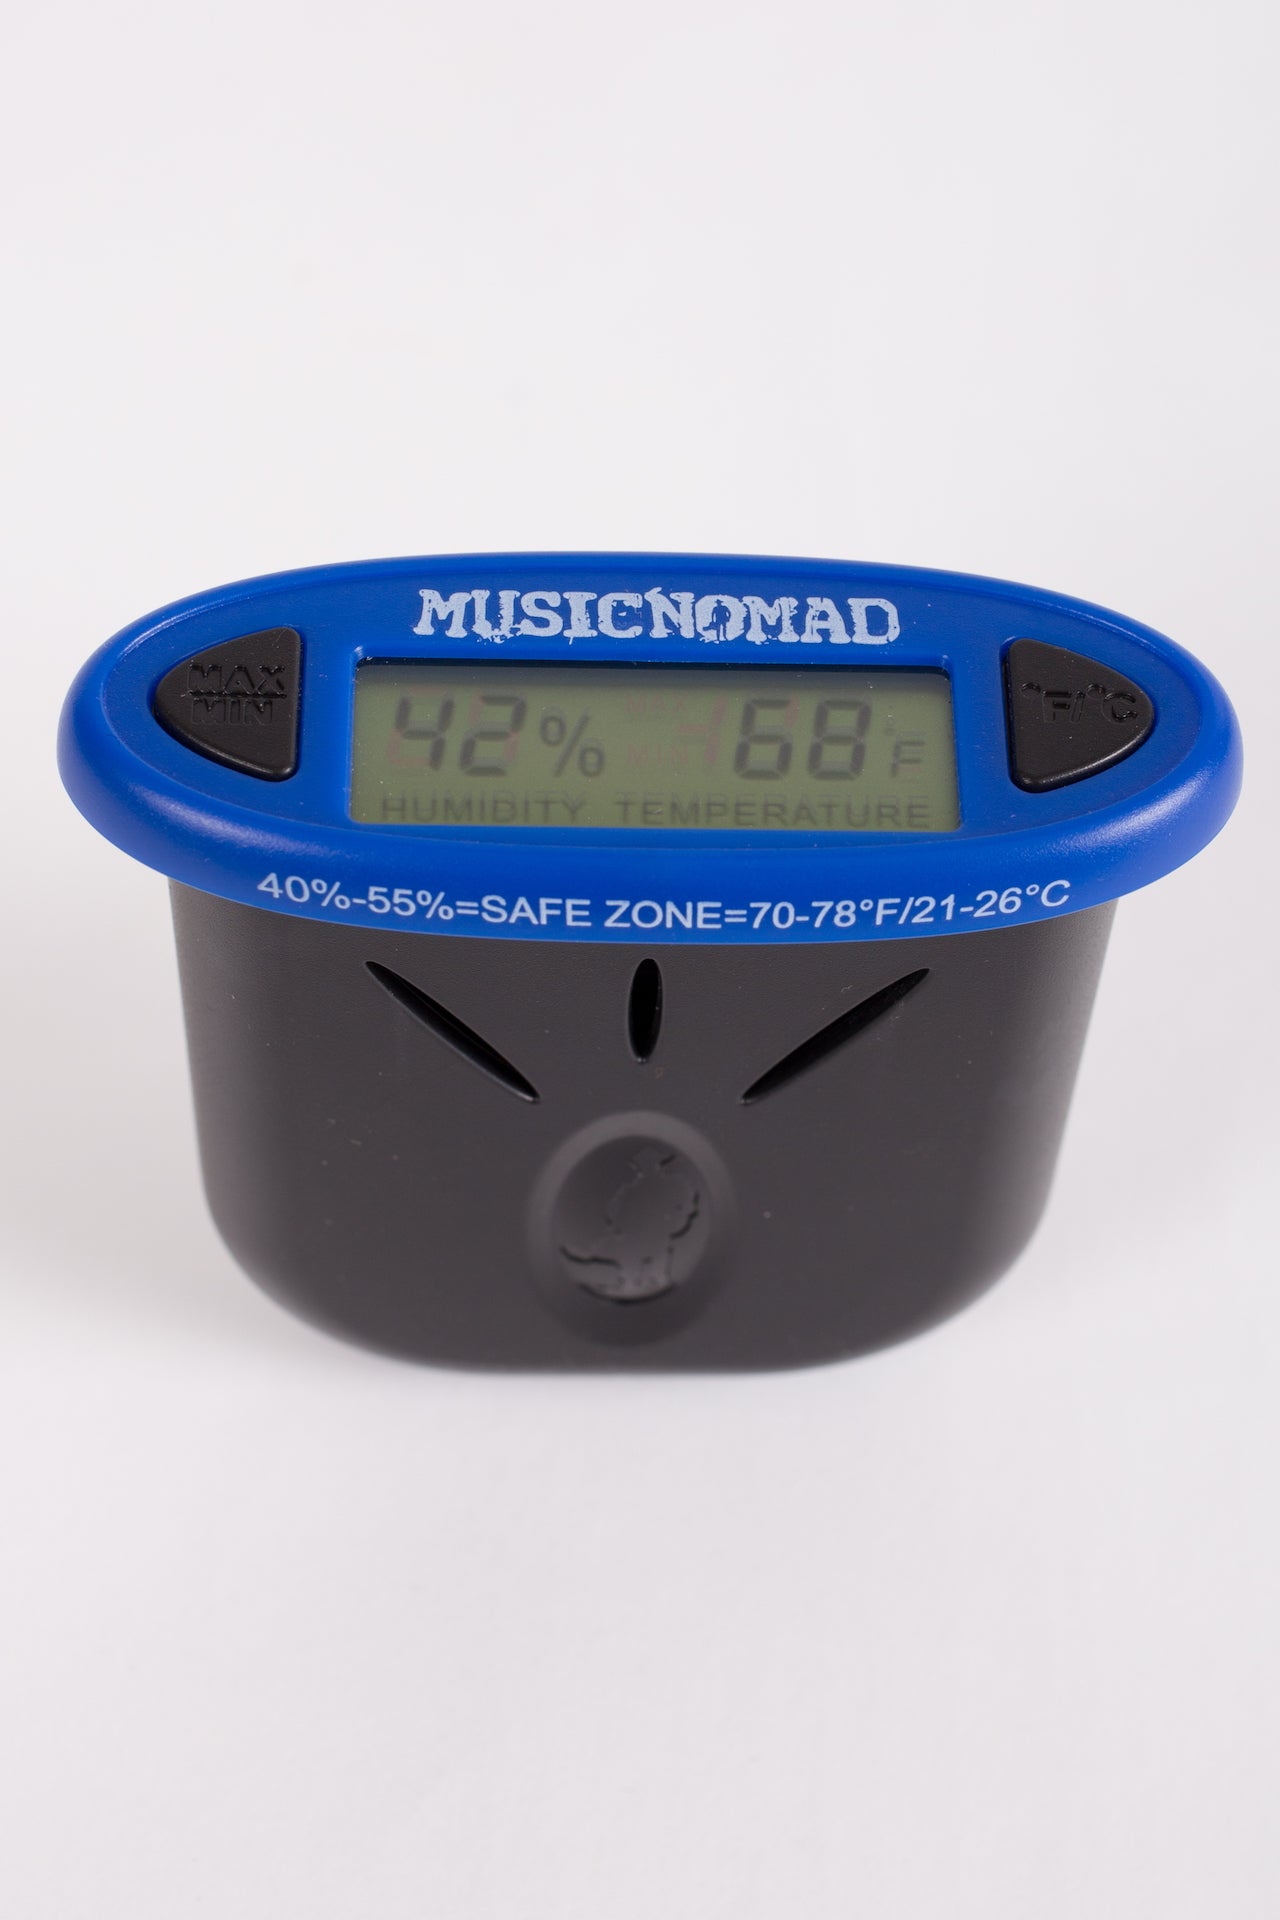 Music Nomad The HumiReader - Humidity & Temperature Monitor  MN305 - HIENDGUITAR   musicnomad musicnomad